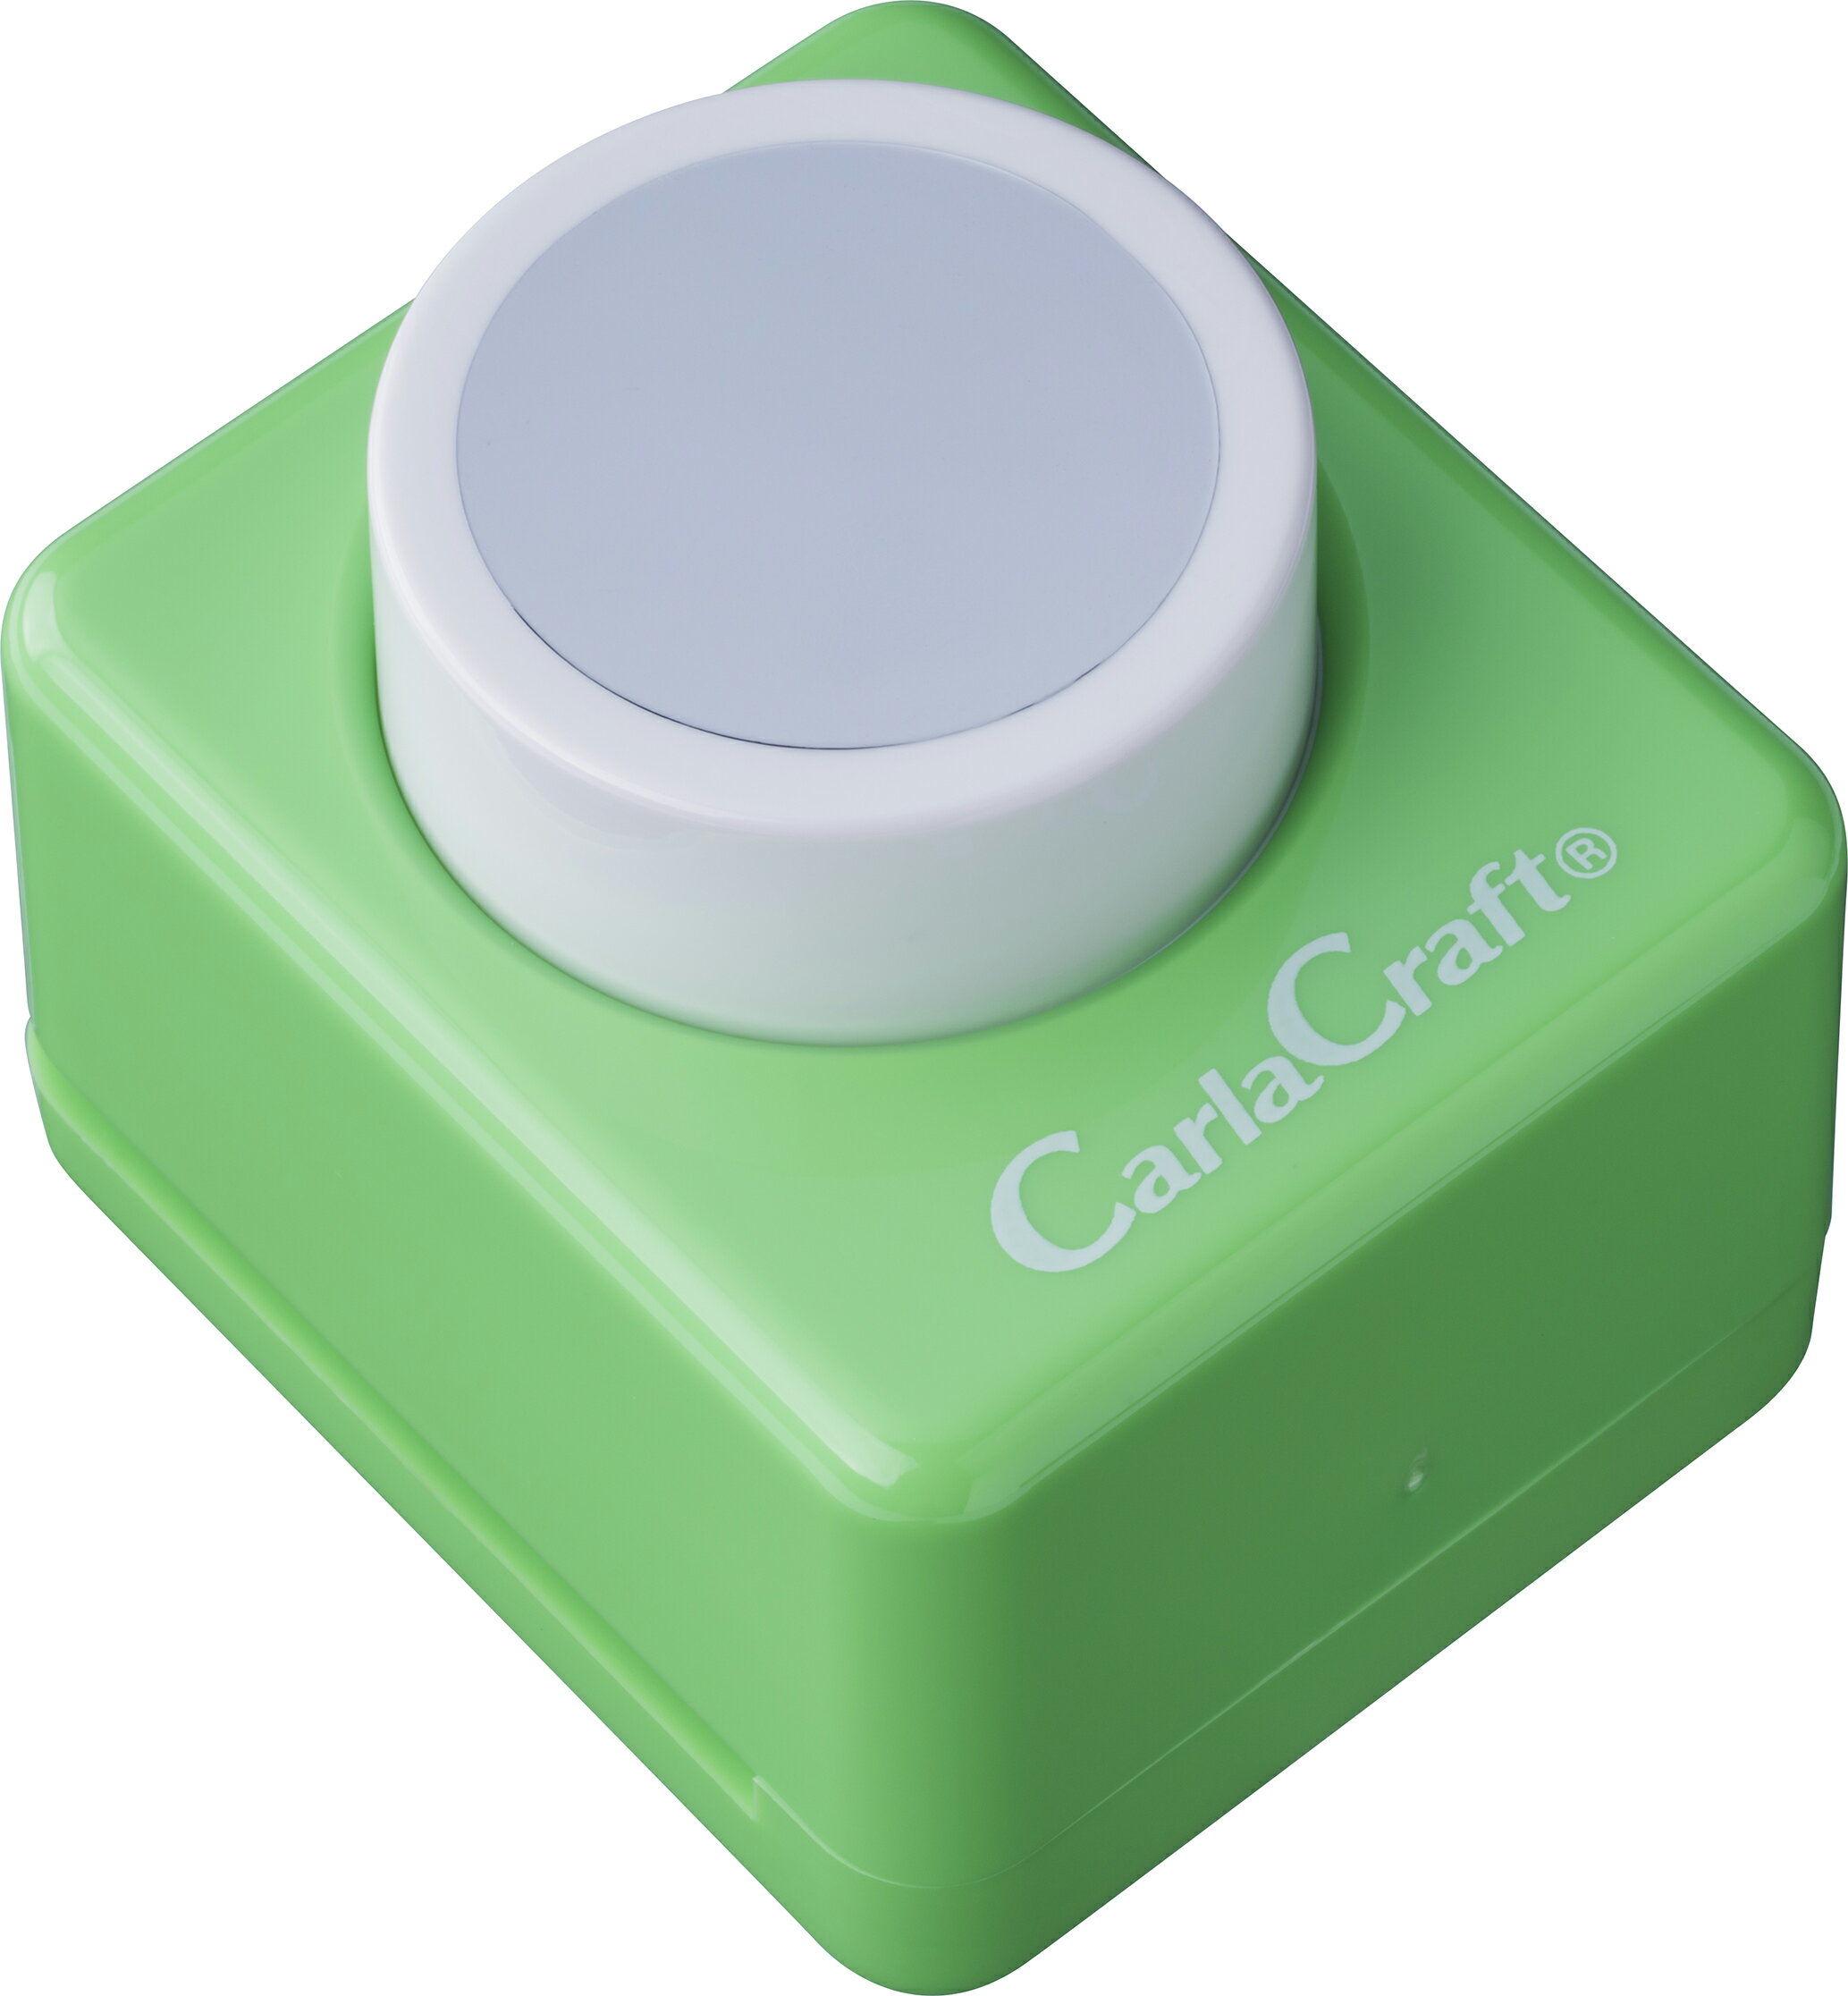 CARL/カール事務器 ミドルサイズクラフトパンチ 1サークル CP-2サークル CARL/カール事務器事務器 4971760800161